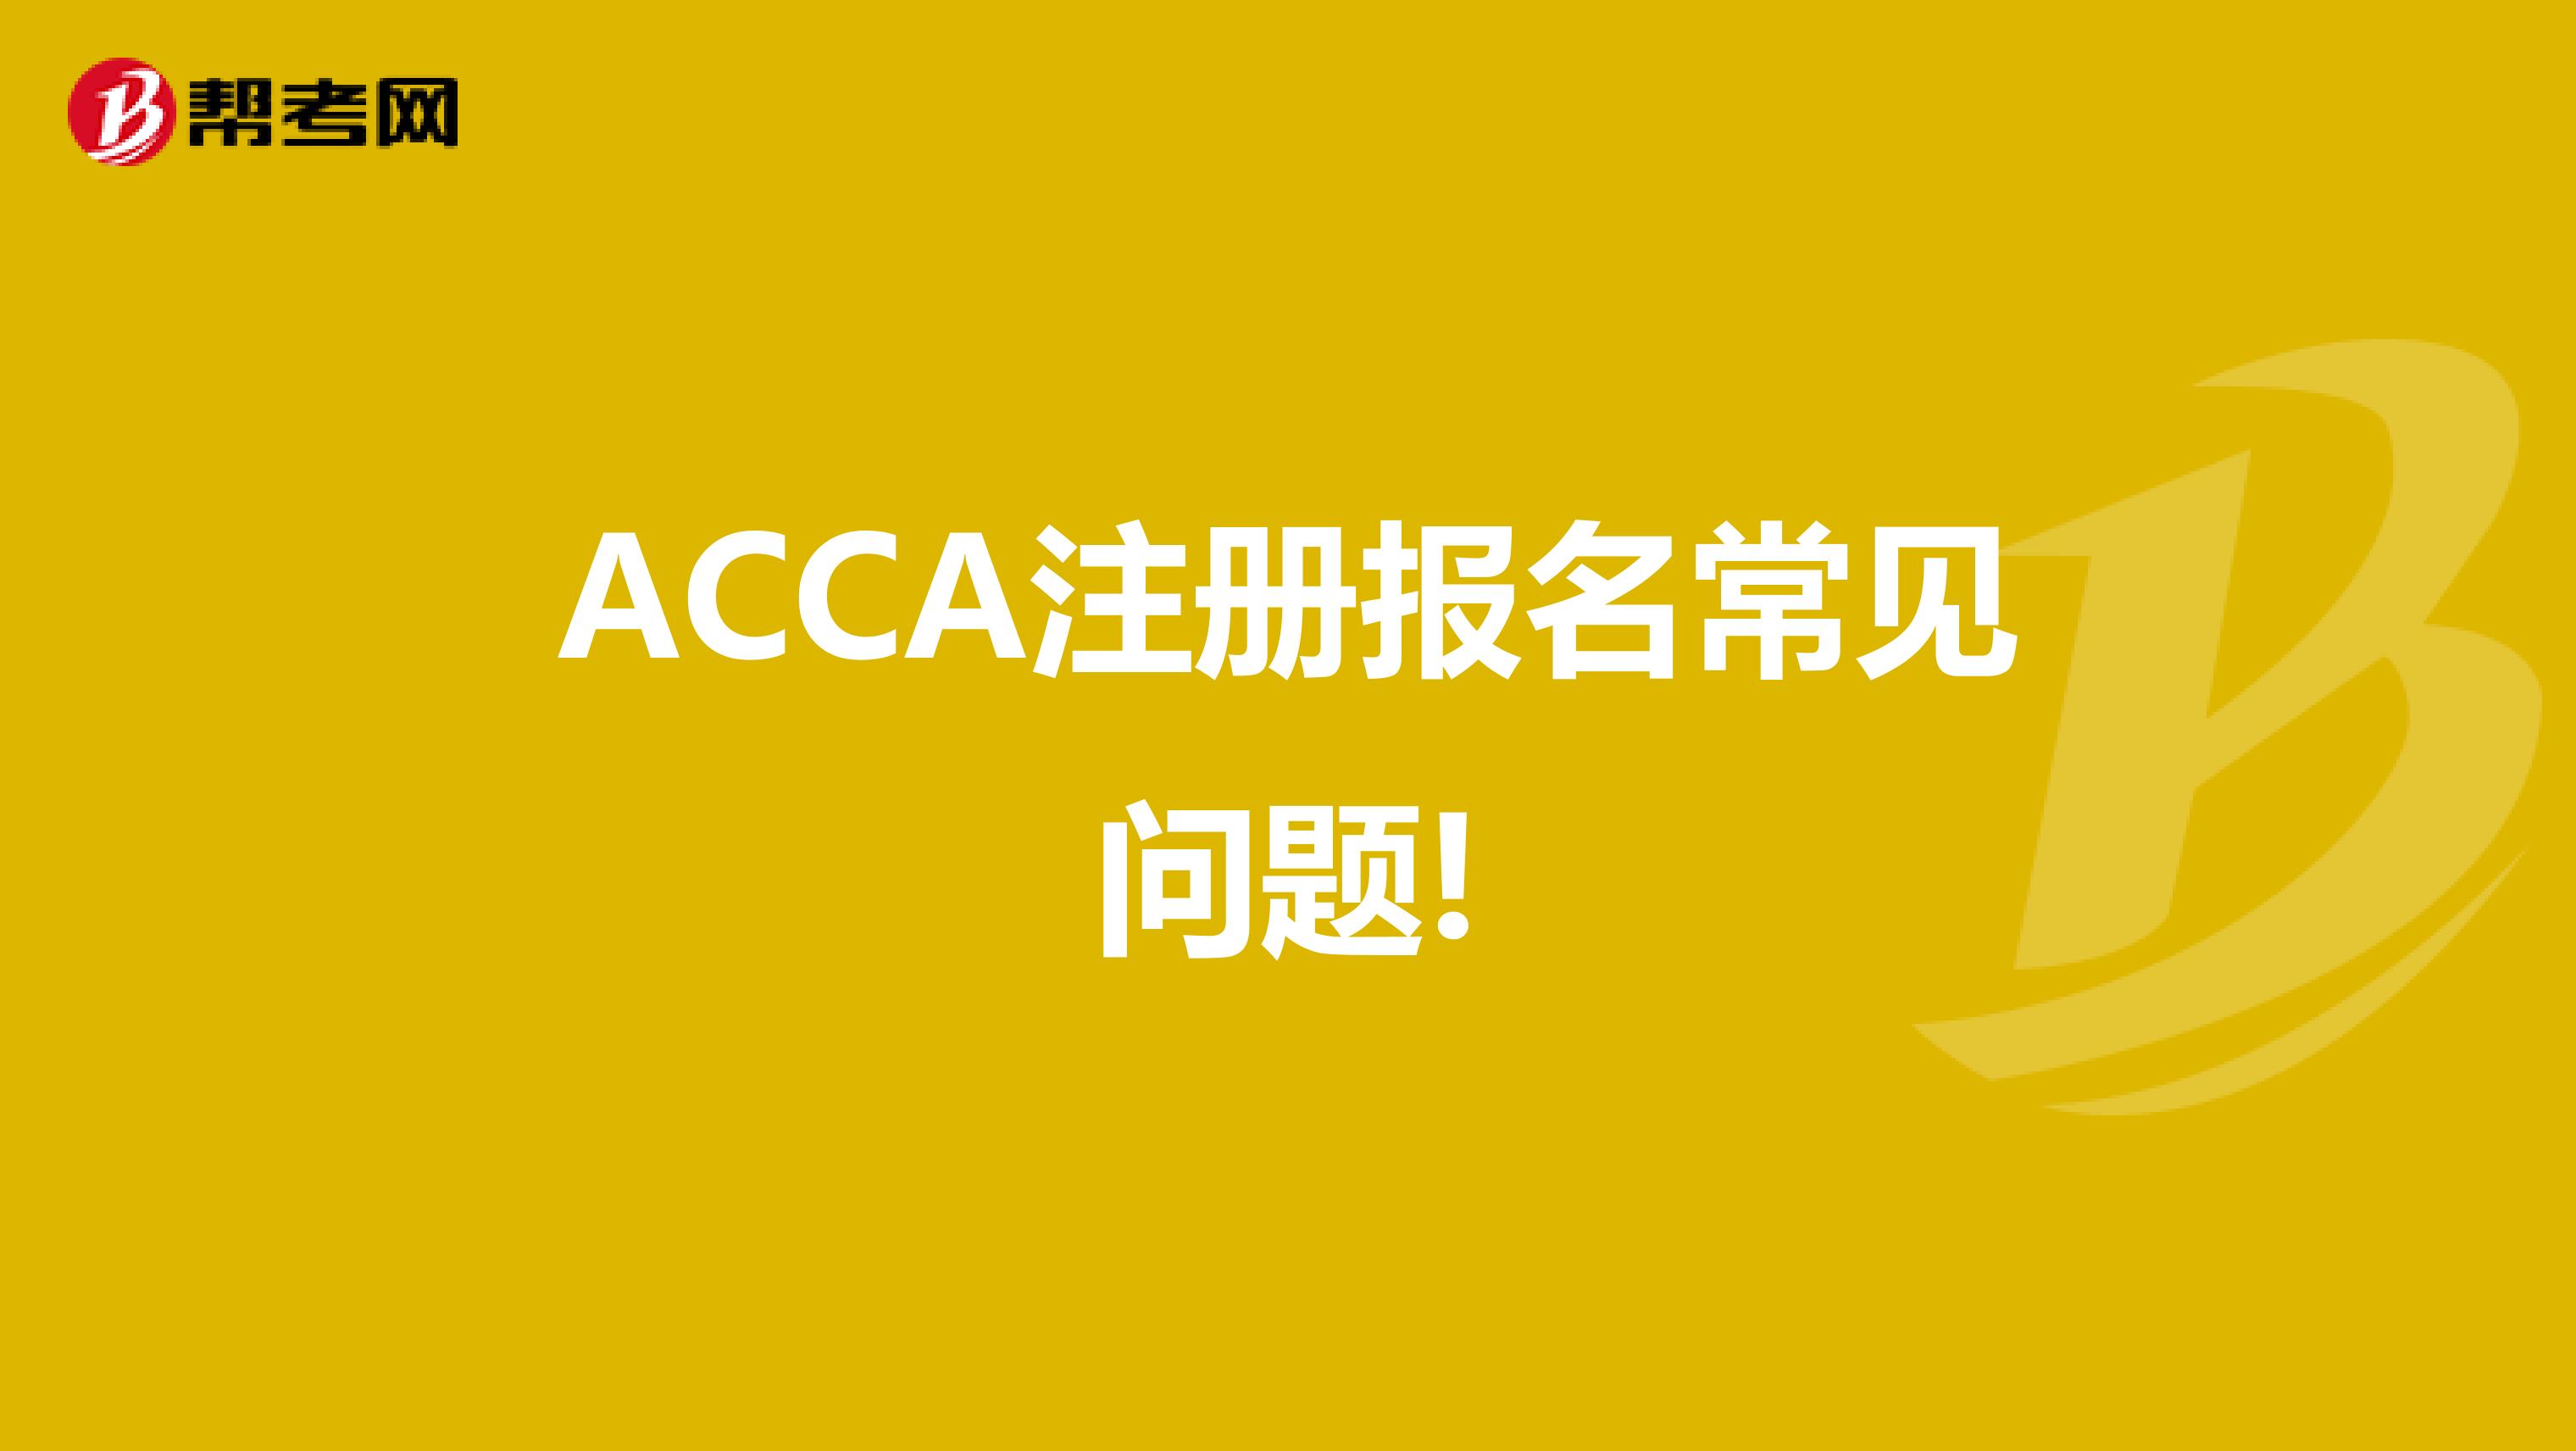 ACCA注册报名常见问题!